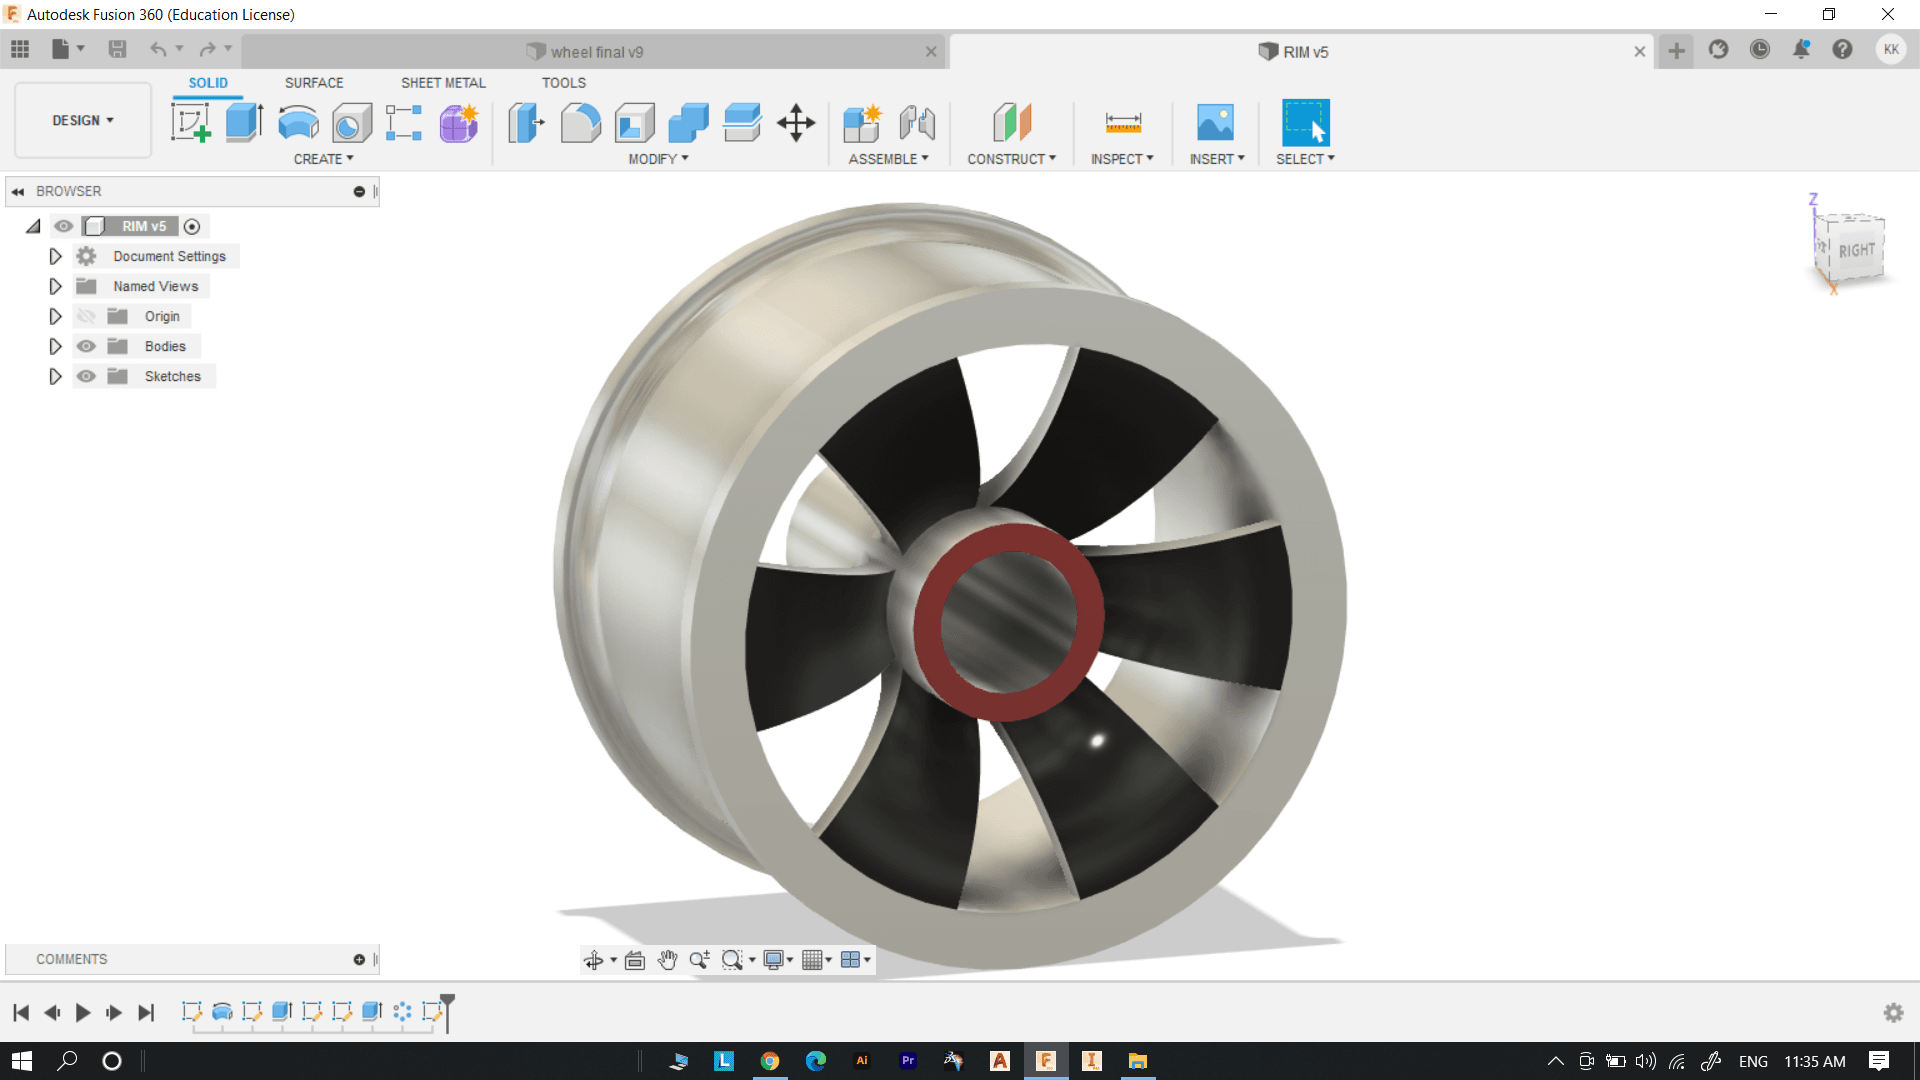 Mag wheel - Rim
Software used Fusion360 - 3d model